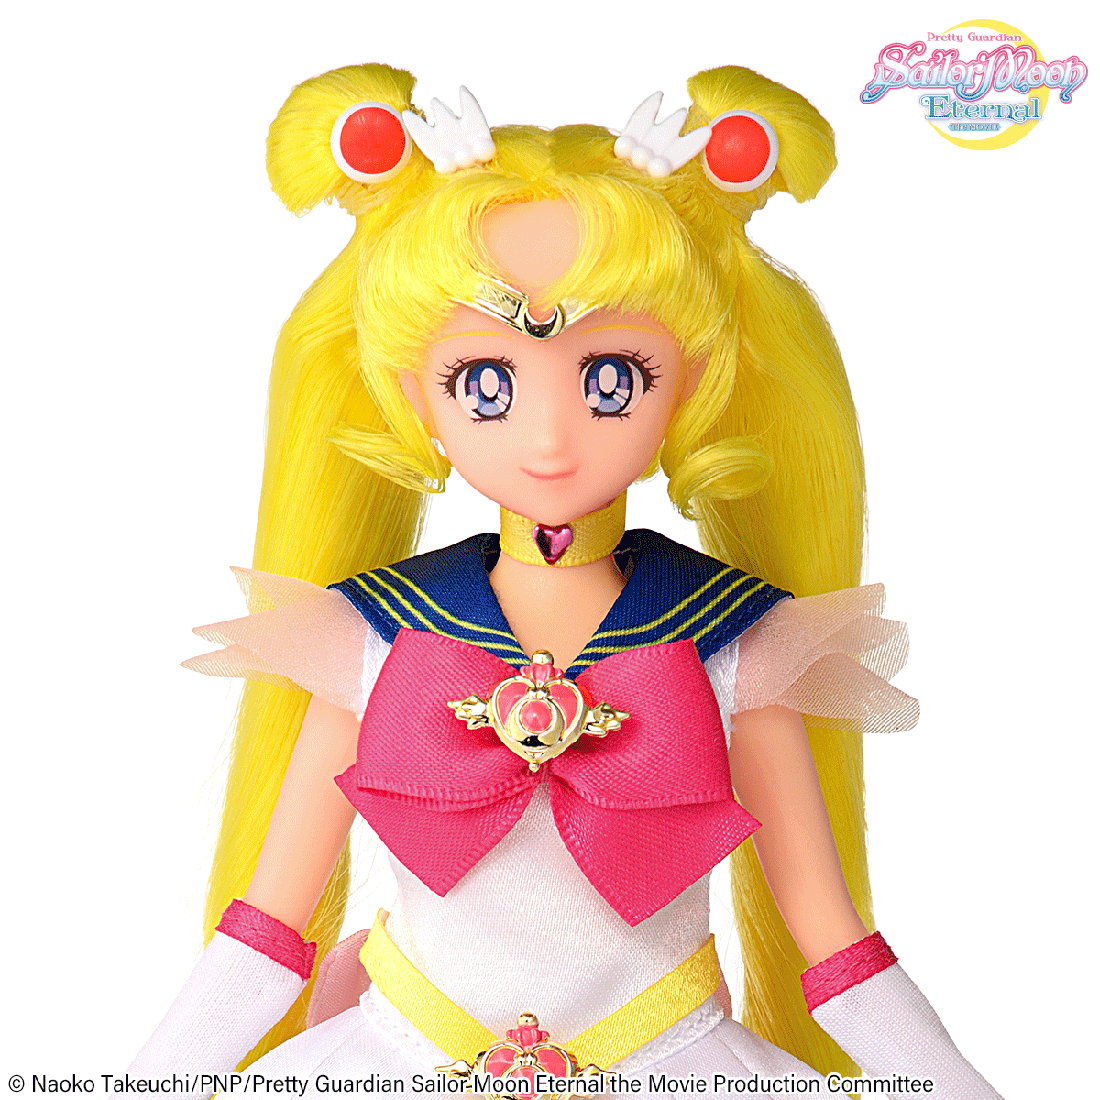  "Pretty Guardian Sailor Moon Eternal The Movie"  StyleDoll Super Sailor Moon 